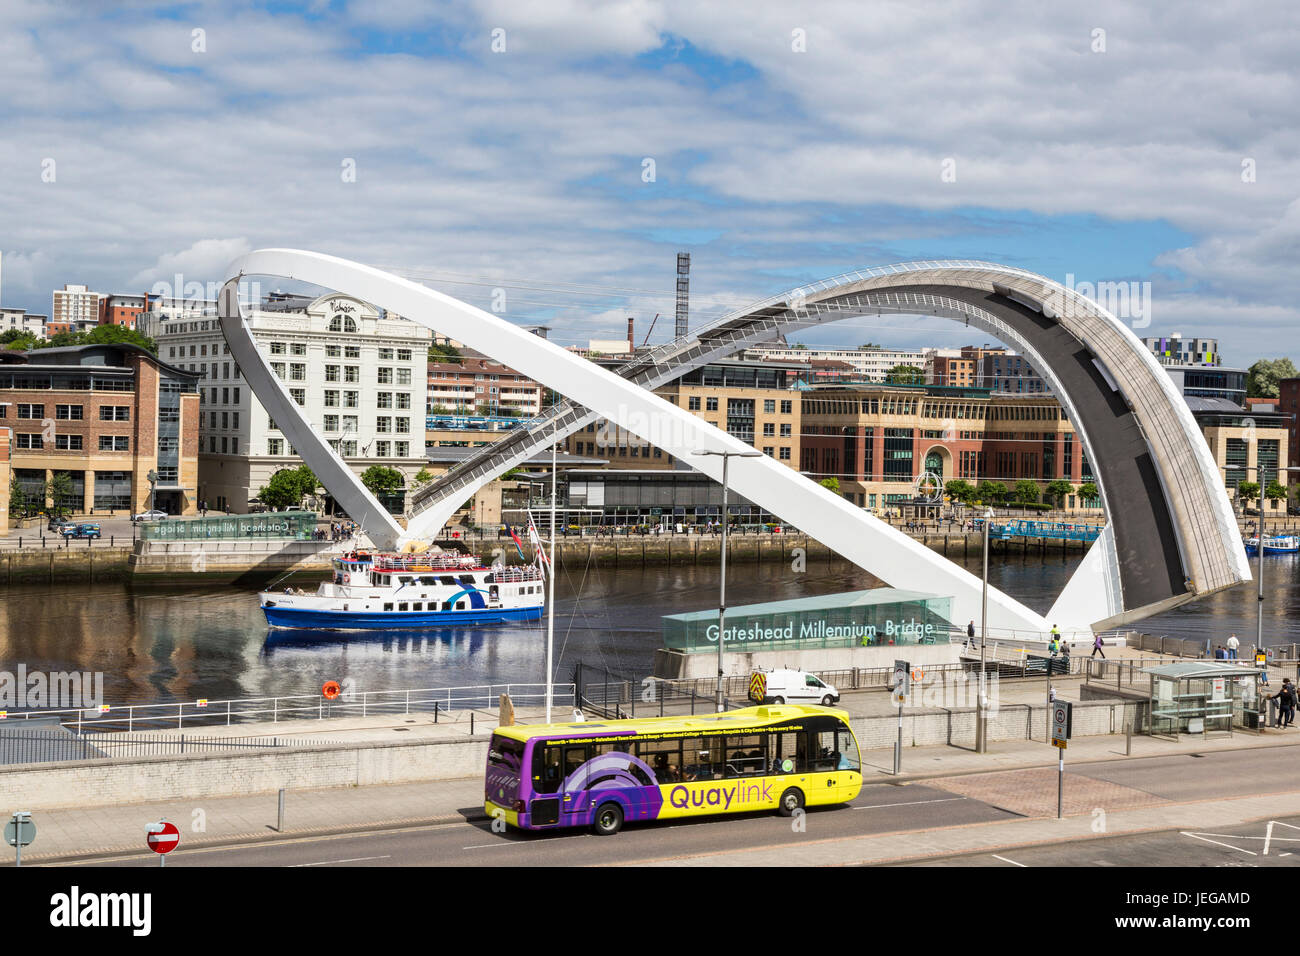 Newcastle-upon-Tyne, England, UK.  Gateshead Millennium Bridge in Mid-day Rotation  over the River Tyne. Stock Photo